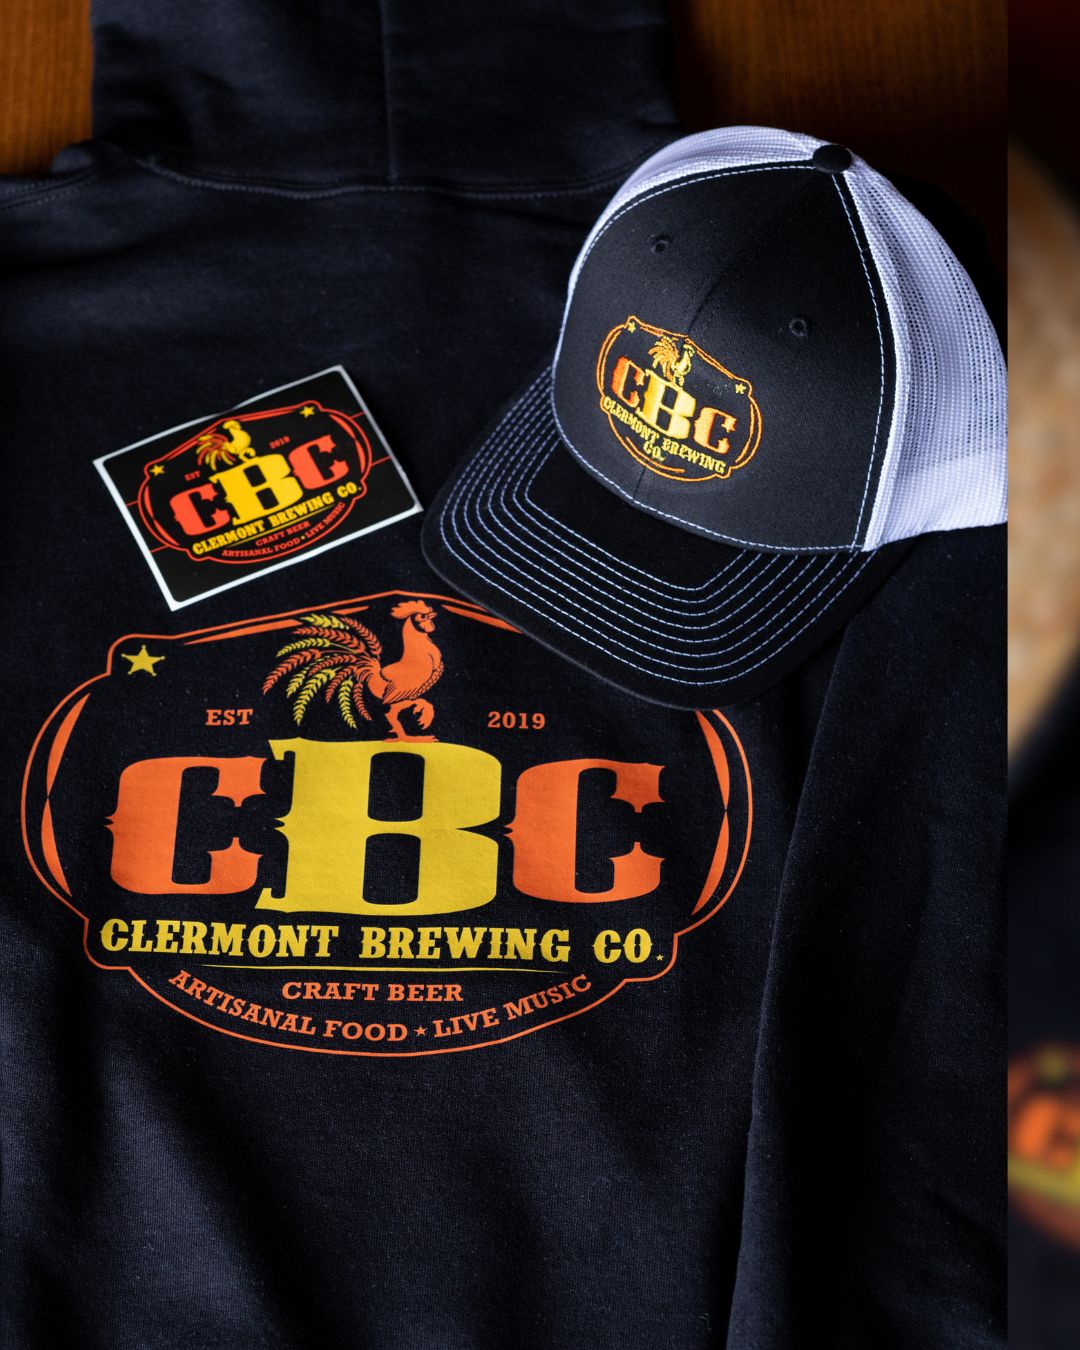 clermont brewing company merchandise, hat, sweatshirt, stick